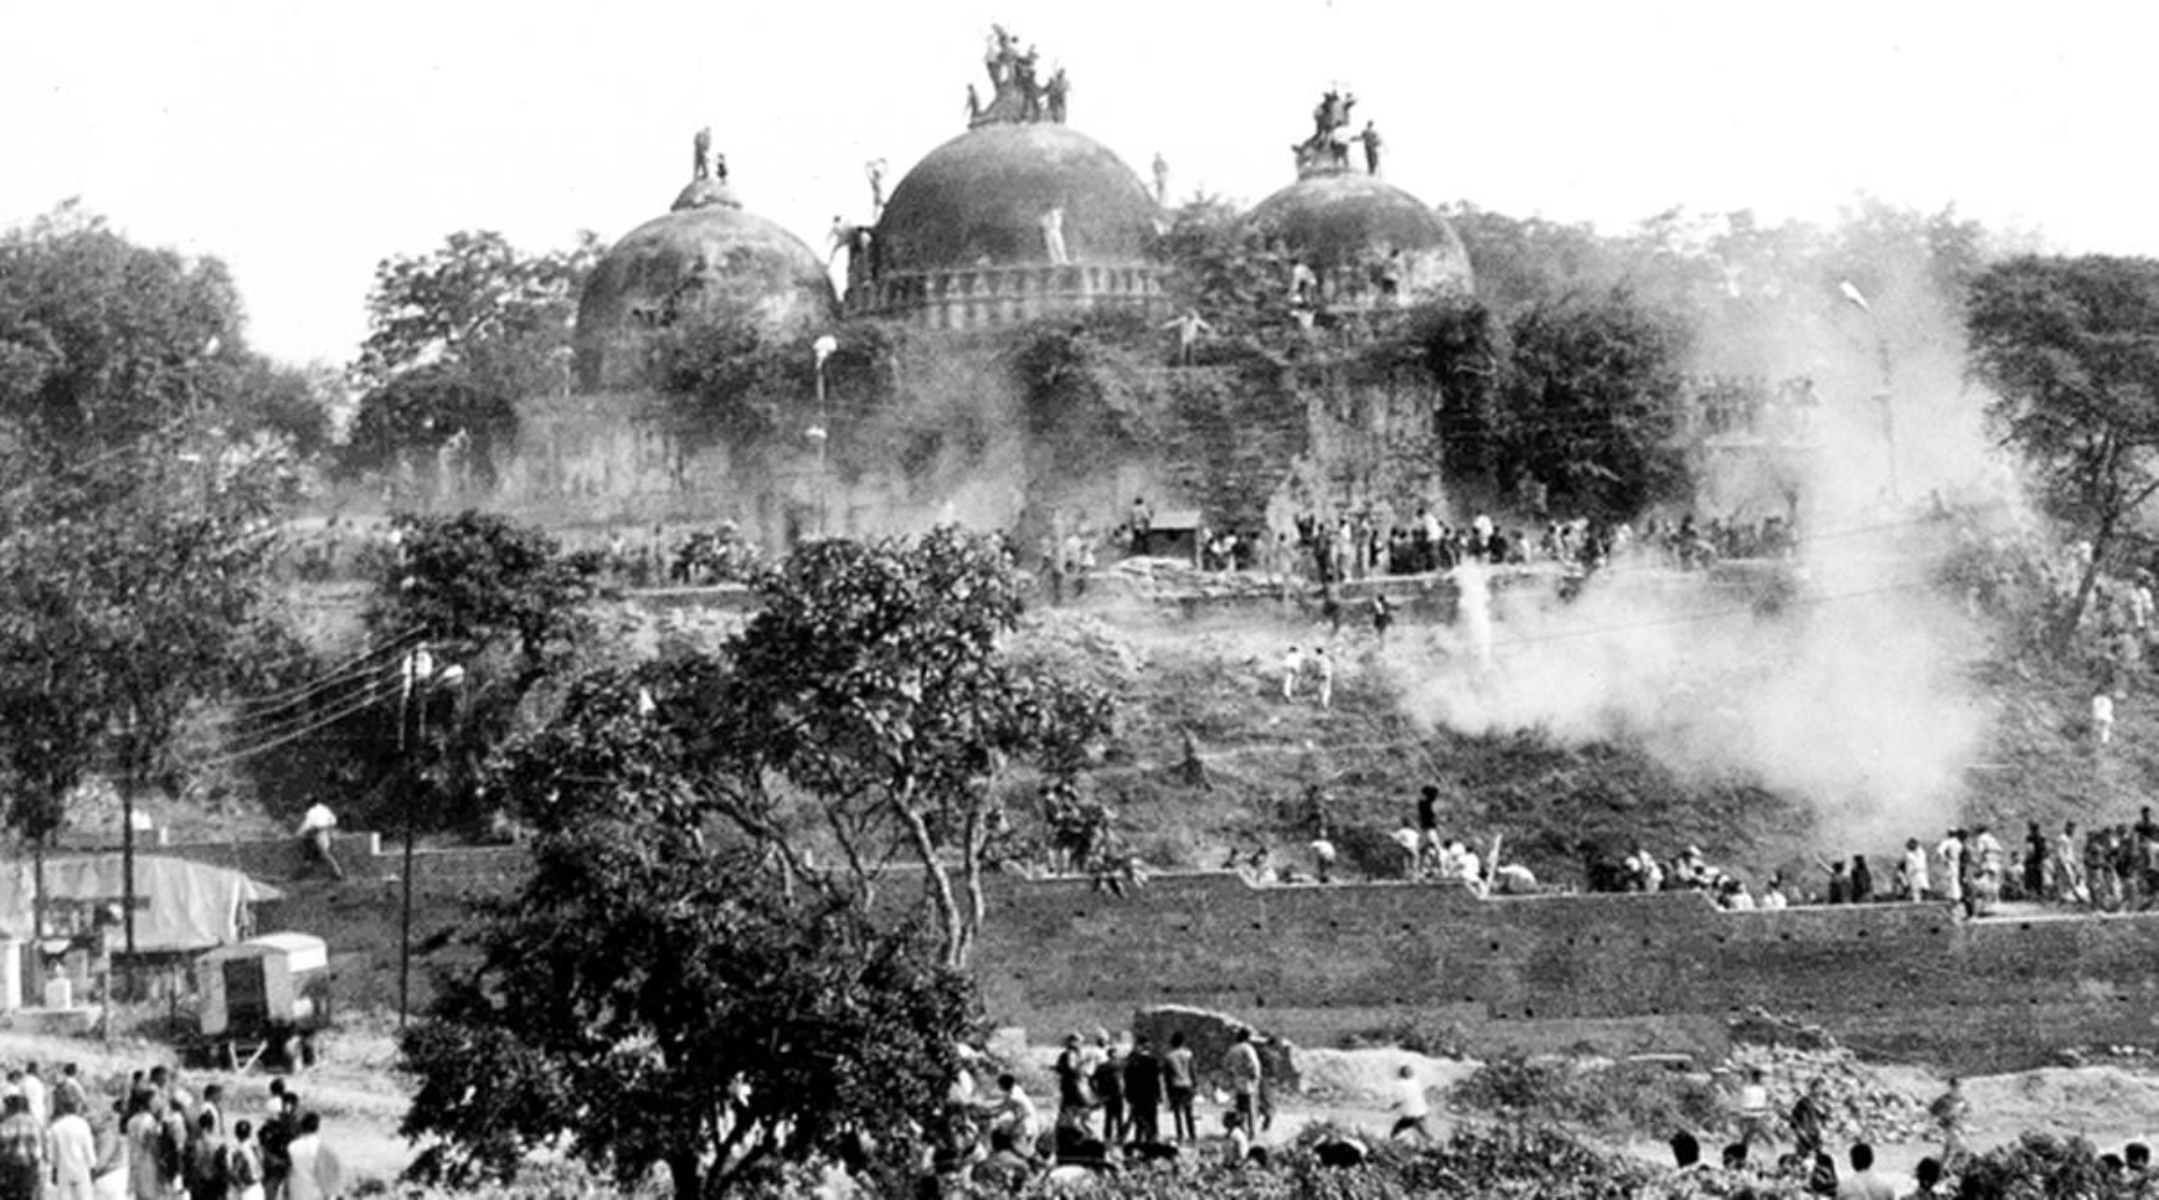 Babri Masjid demolition